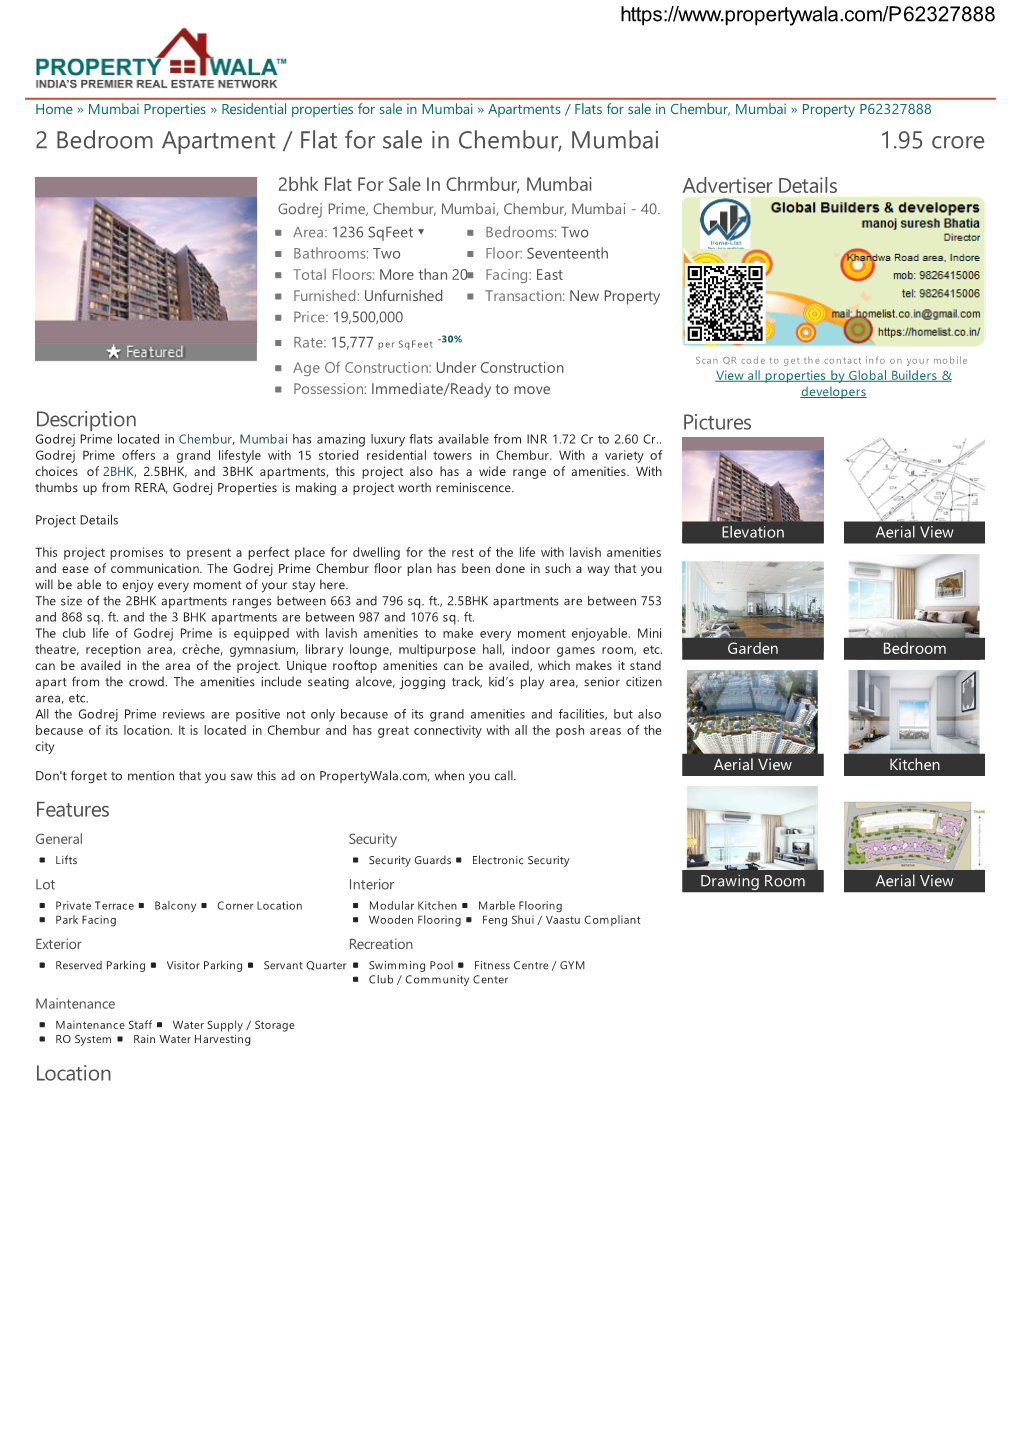 2 Bedroom Apartment / Flat for Sale in Chembur, Mumbai